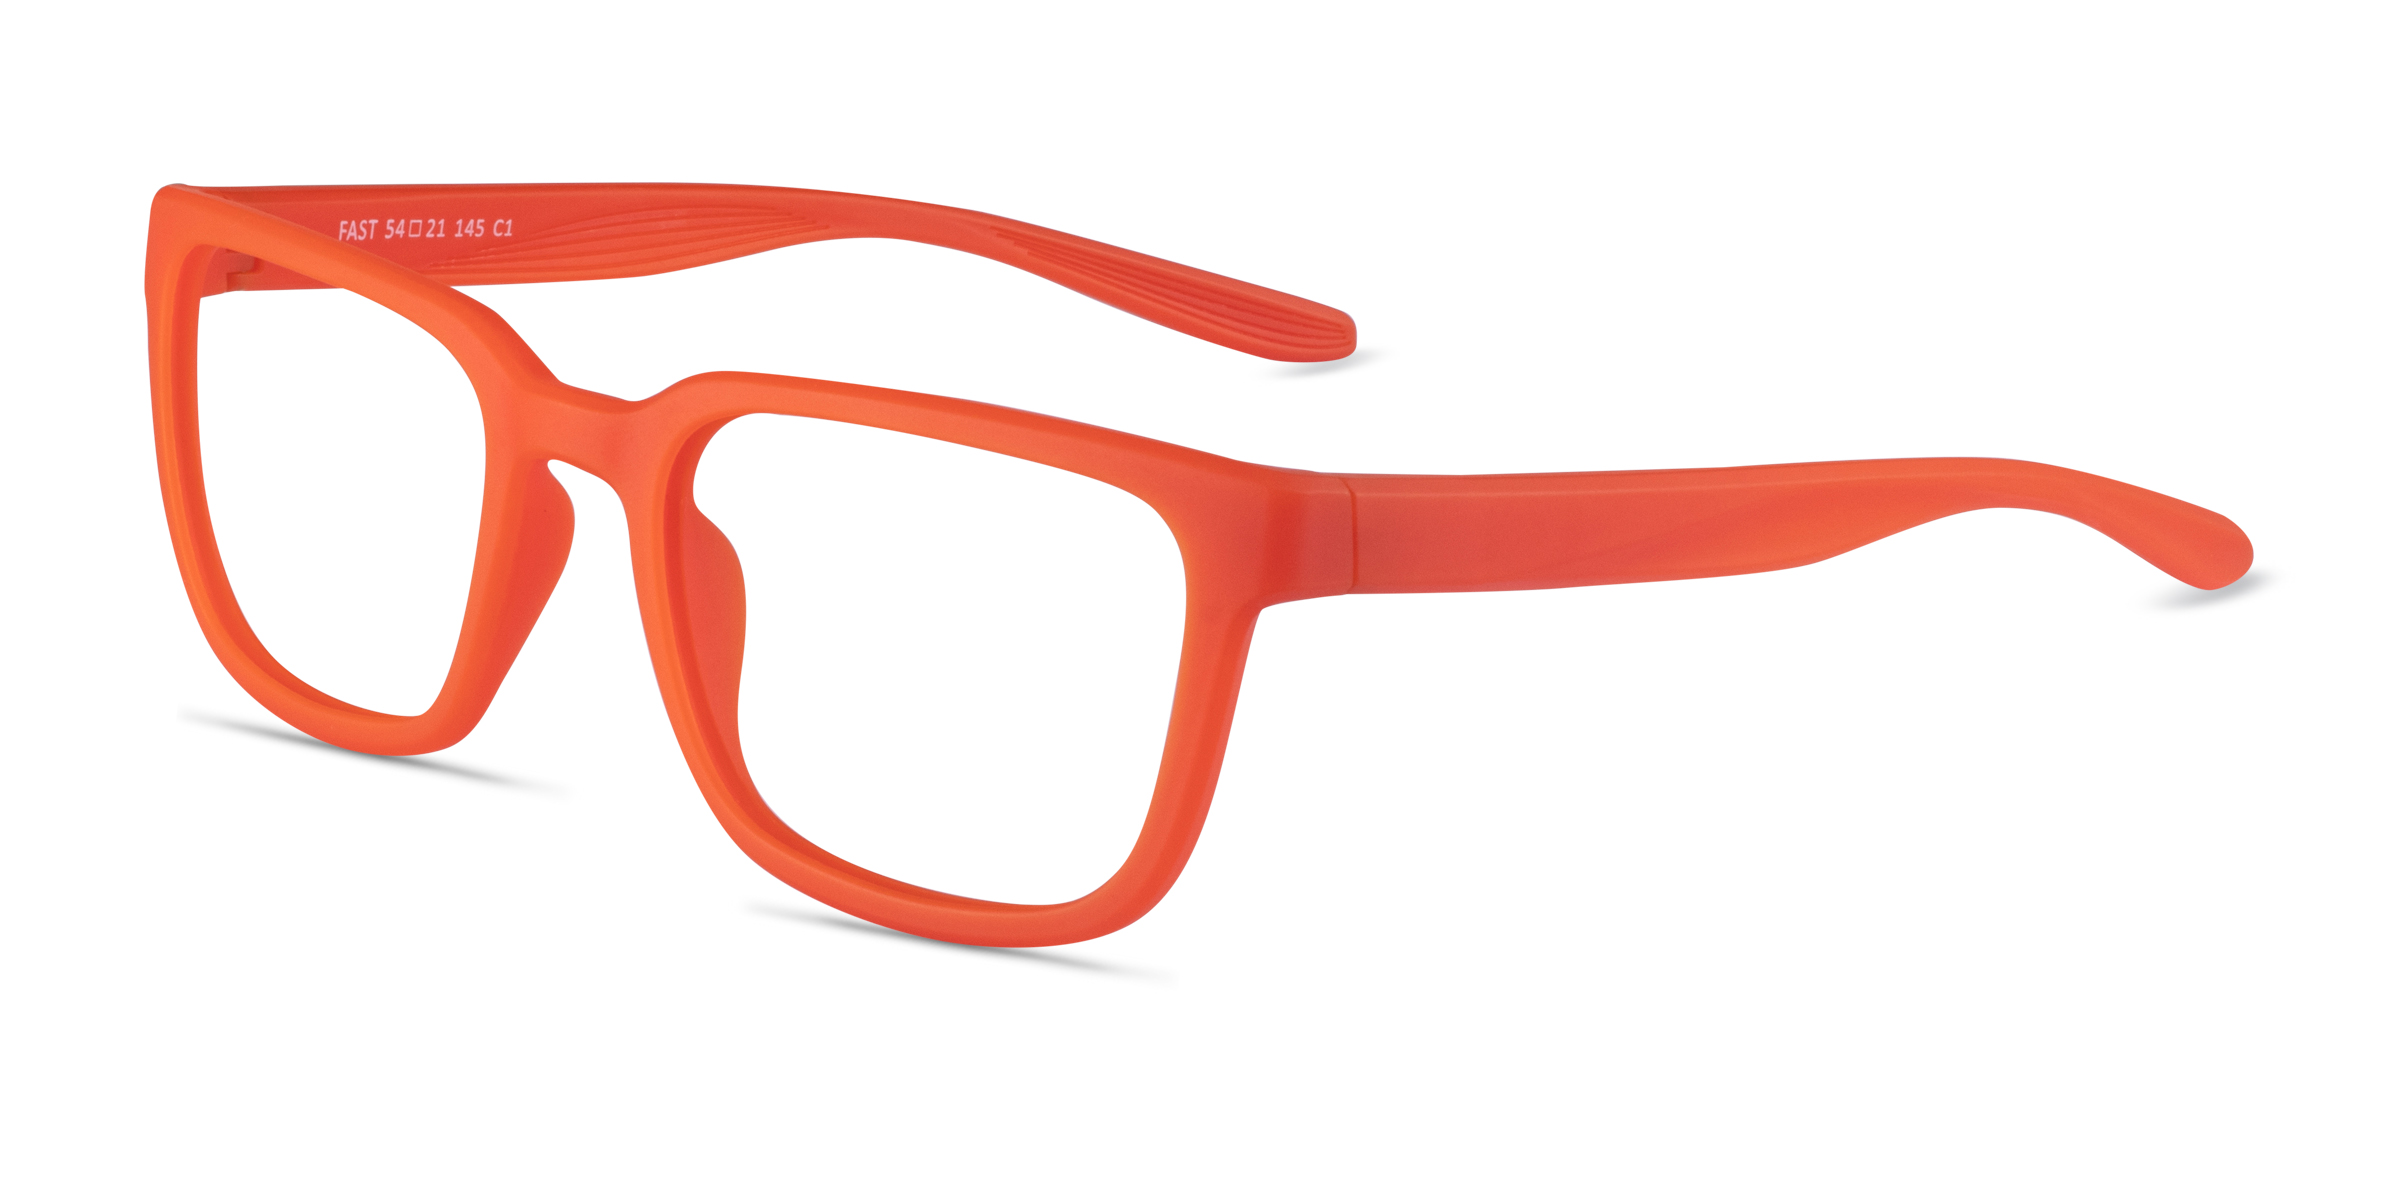 Fast Rectangle Matte Orange Glasses For Men Eyebuydirect Canada 4636